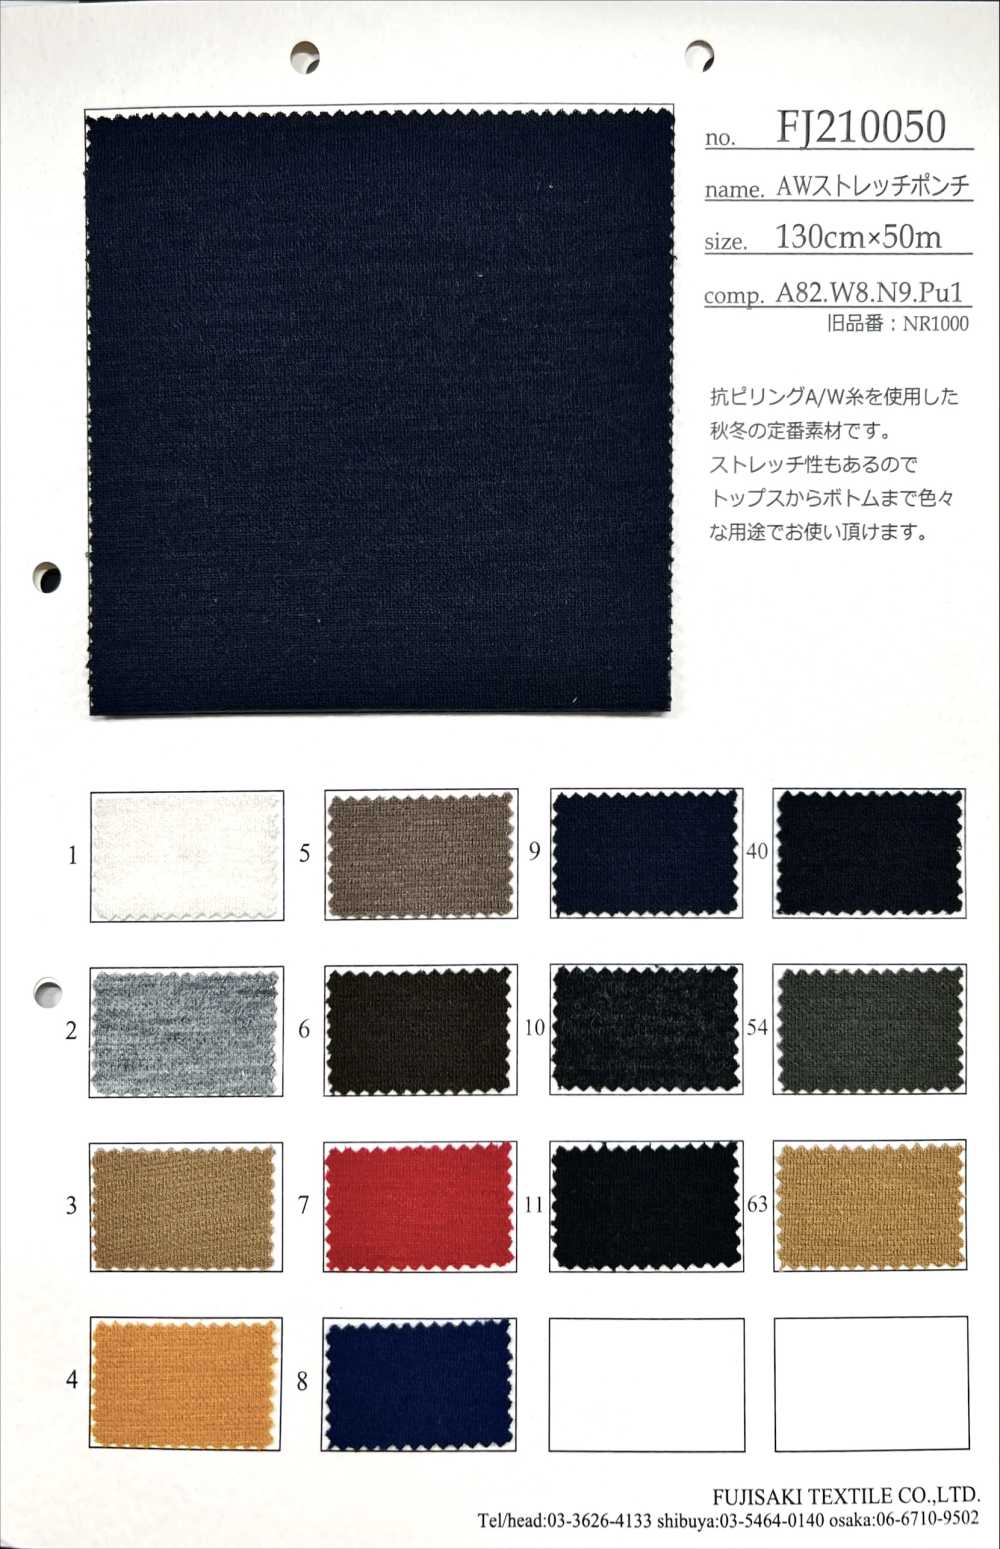 FJ210050 AW 스트레치 분또[원단] Fujisaki Textile